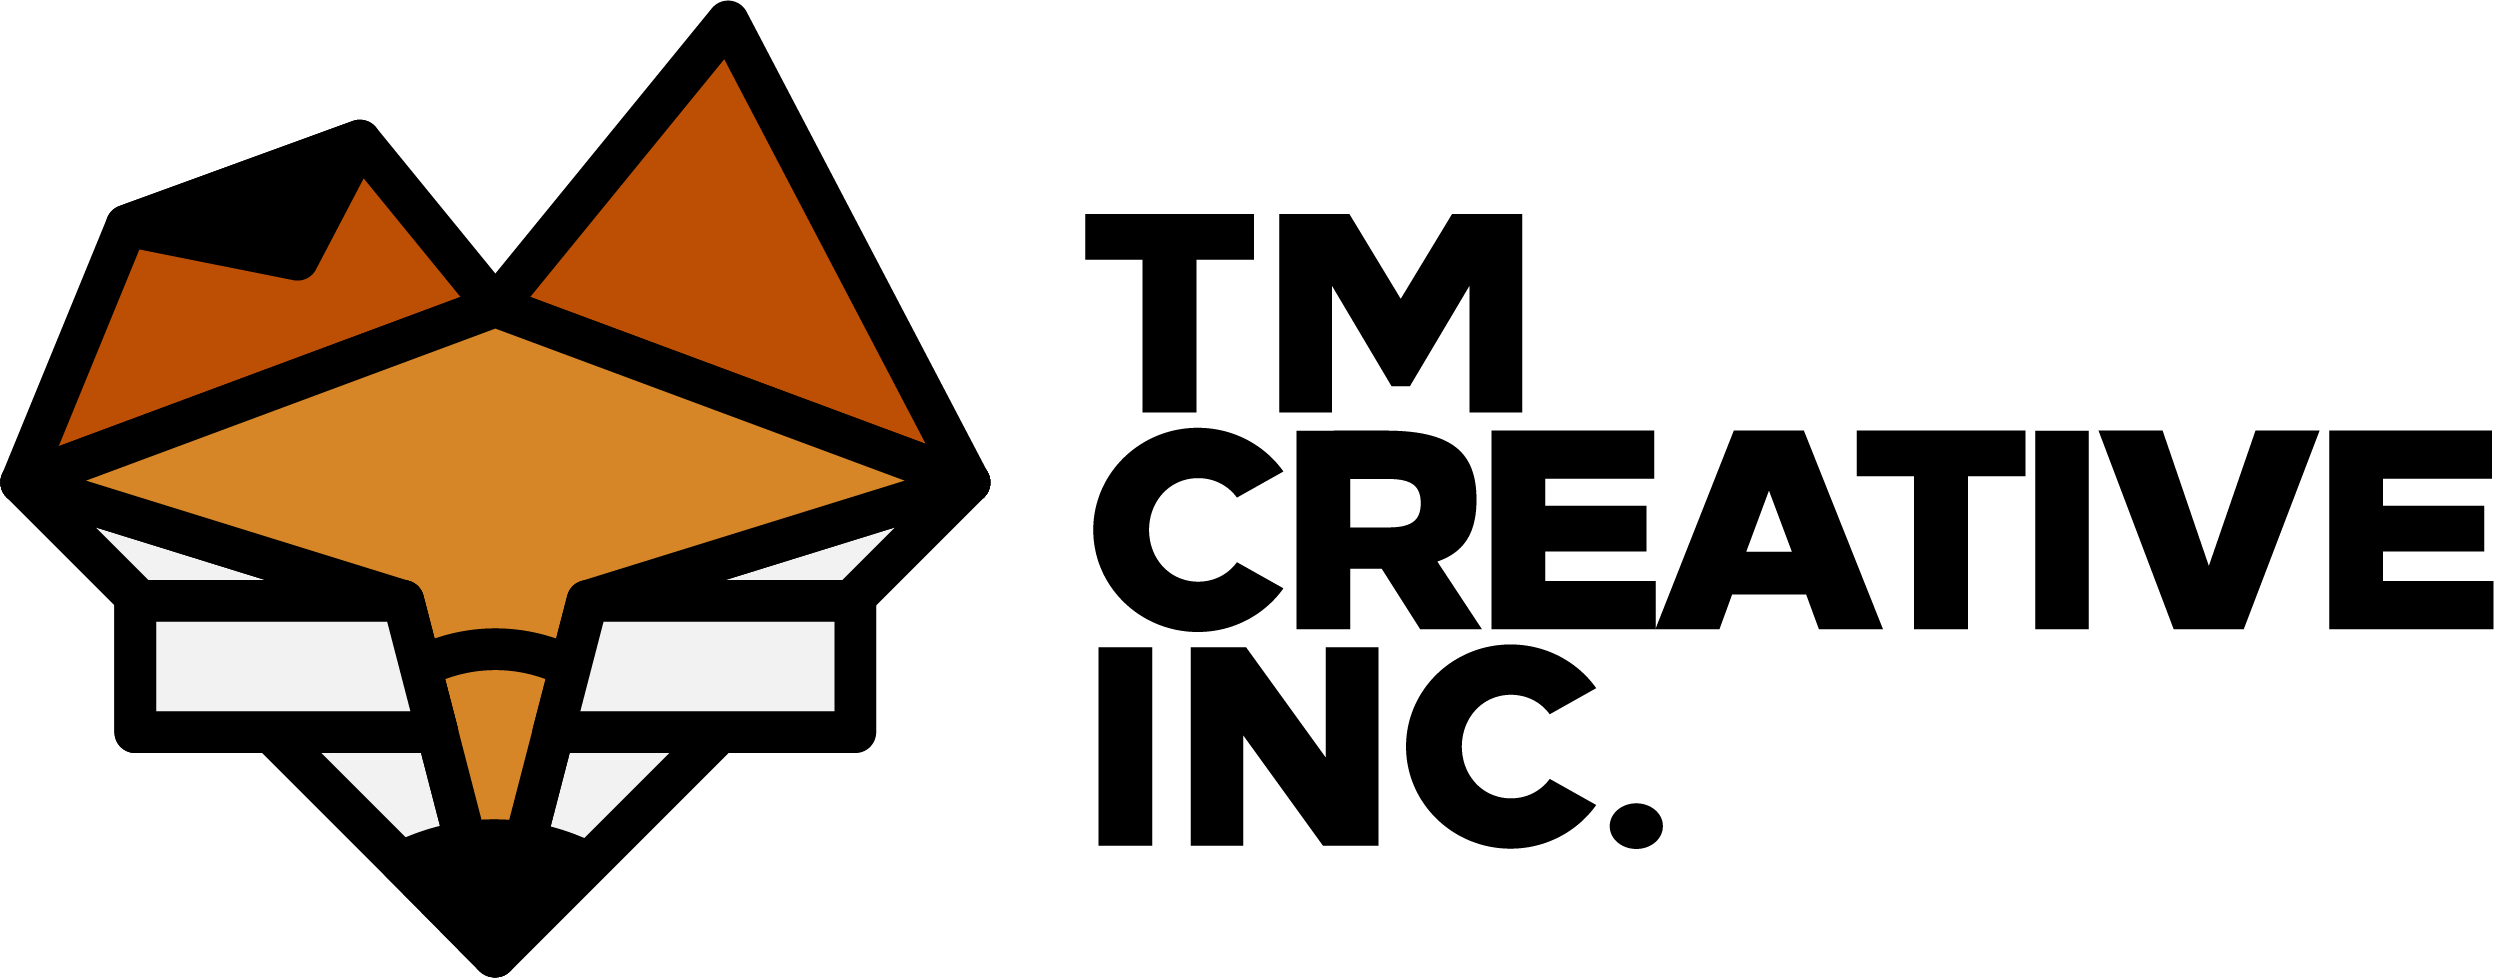 TM CREATIVE, INC